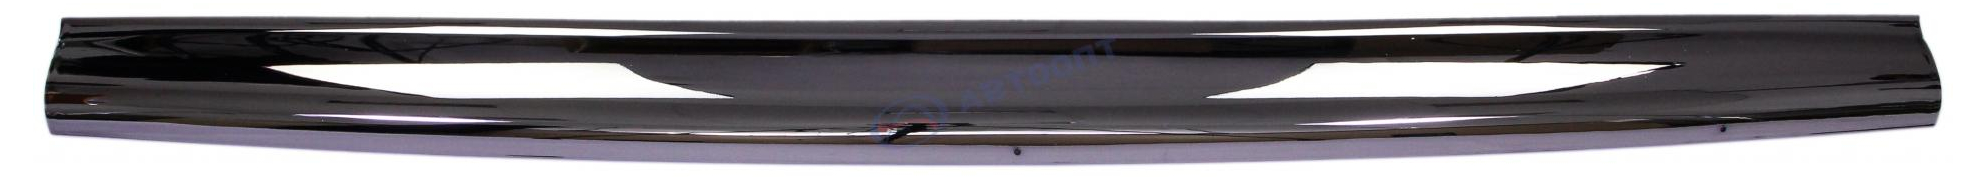 Дефлектор капота ВАЗ 2105 (Хром) VORON GLASS (MUKH0313)